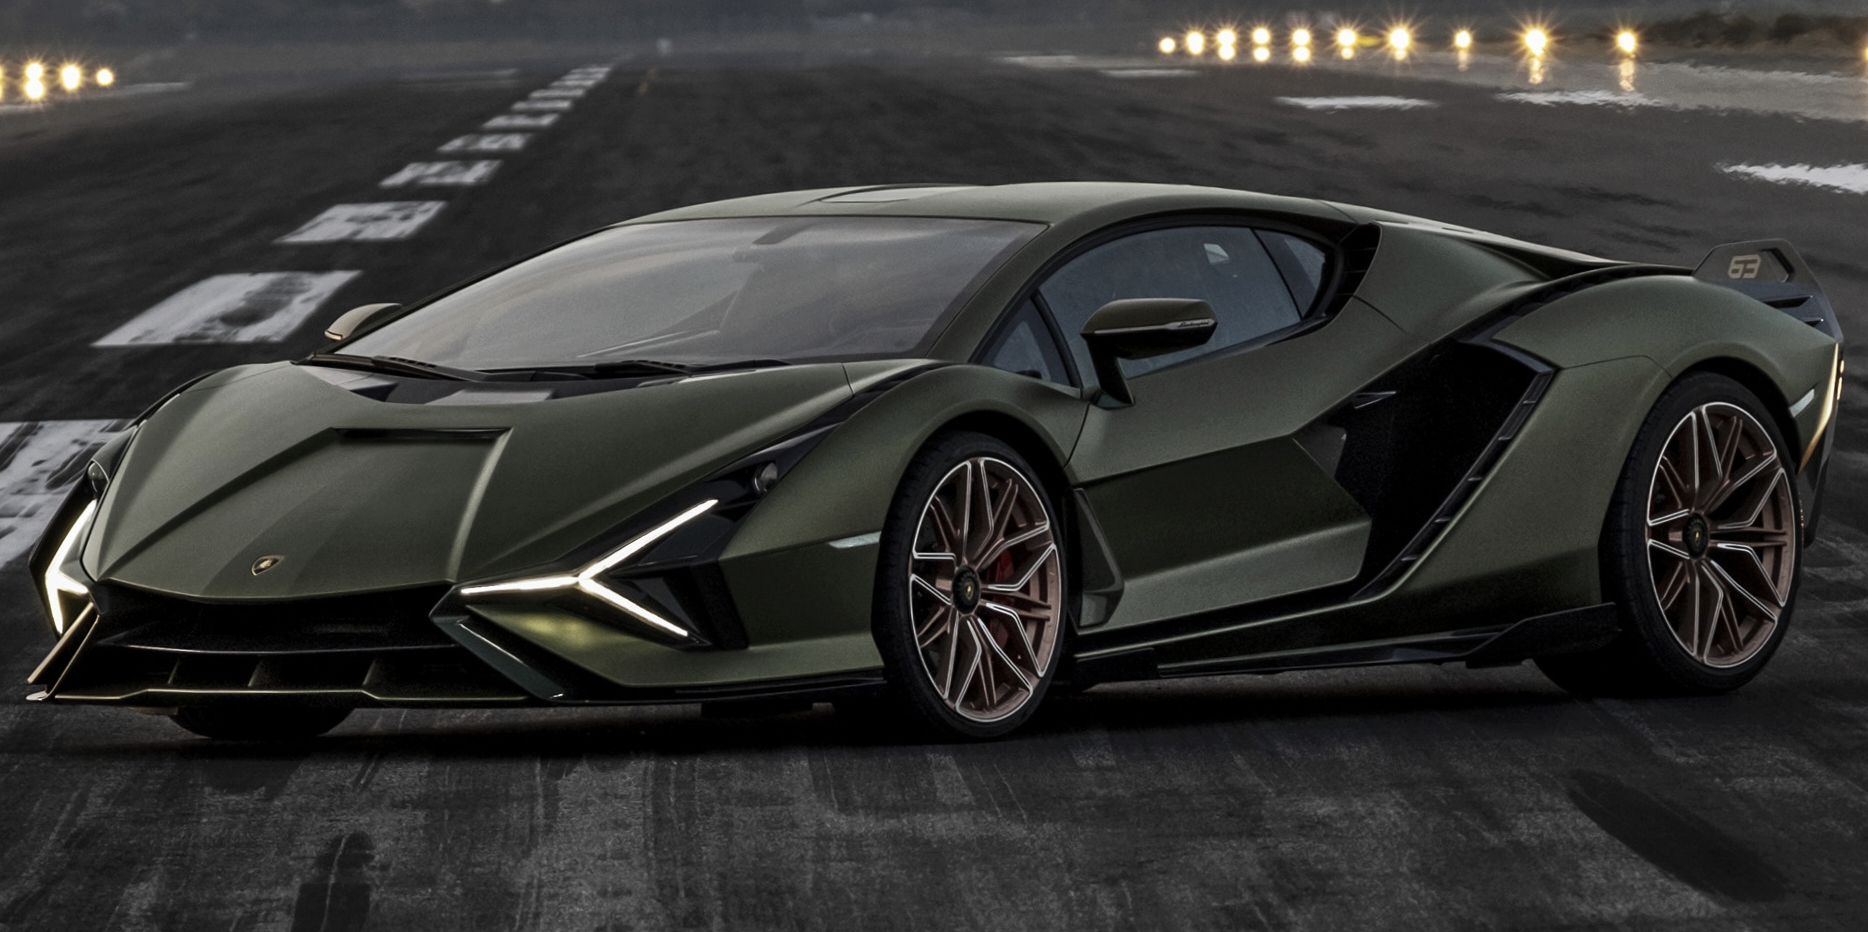 Intip 5 Inovasi Canggih pada Lamborghini Aventador Super Sport Menguak Kehebatan Supercar Italia